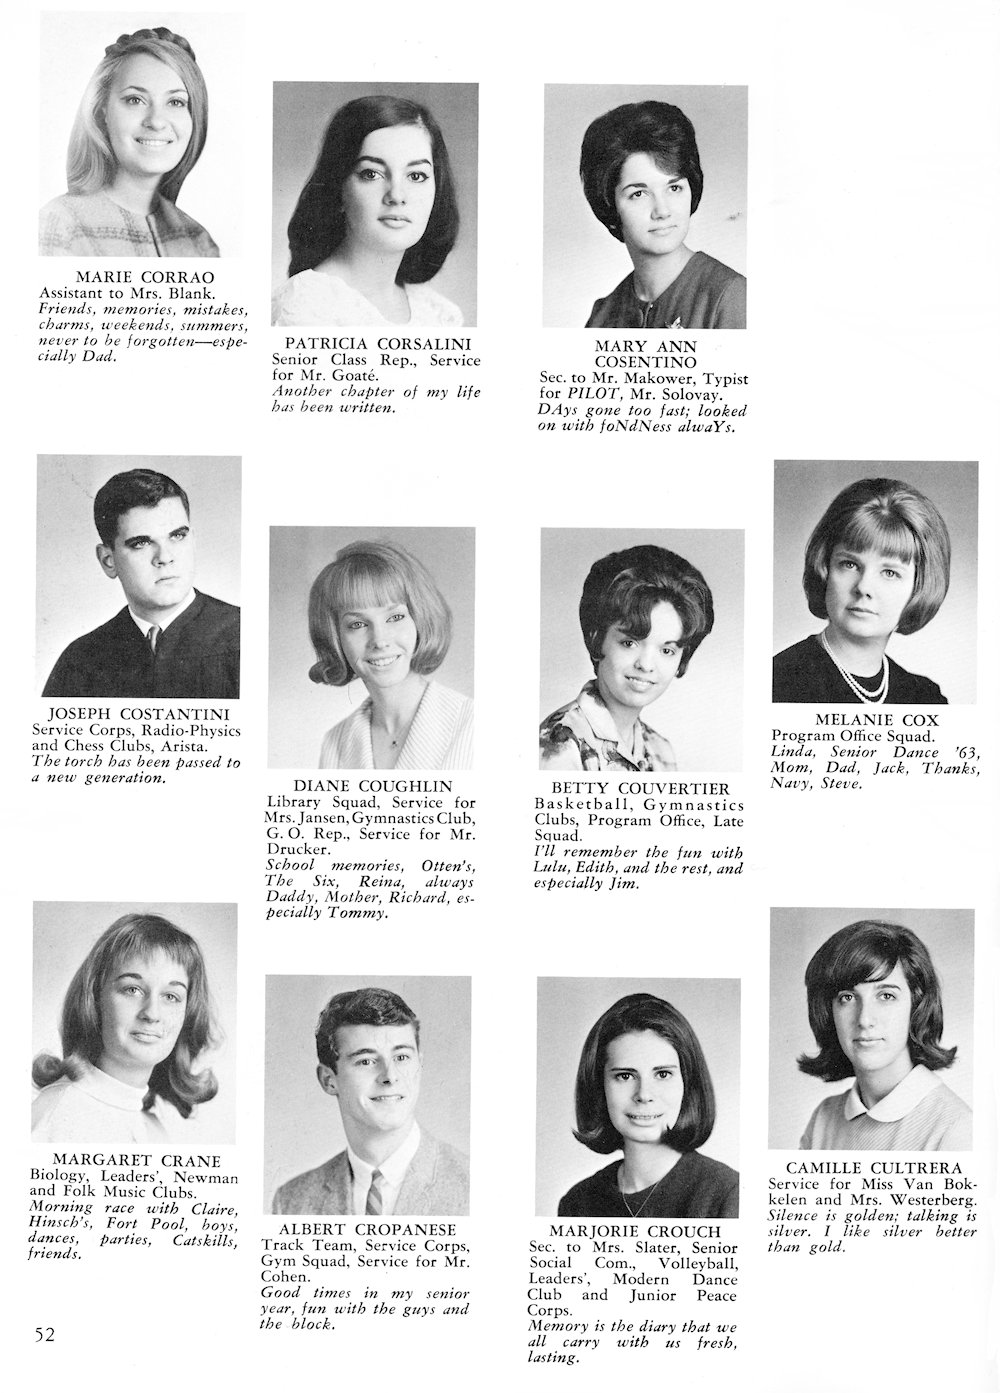 Corrao-Cultrera page from Fort Hamilton High School 1965